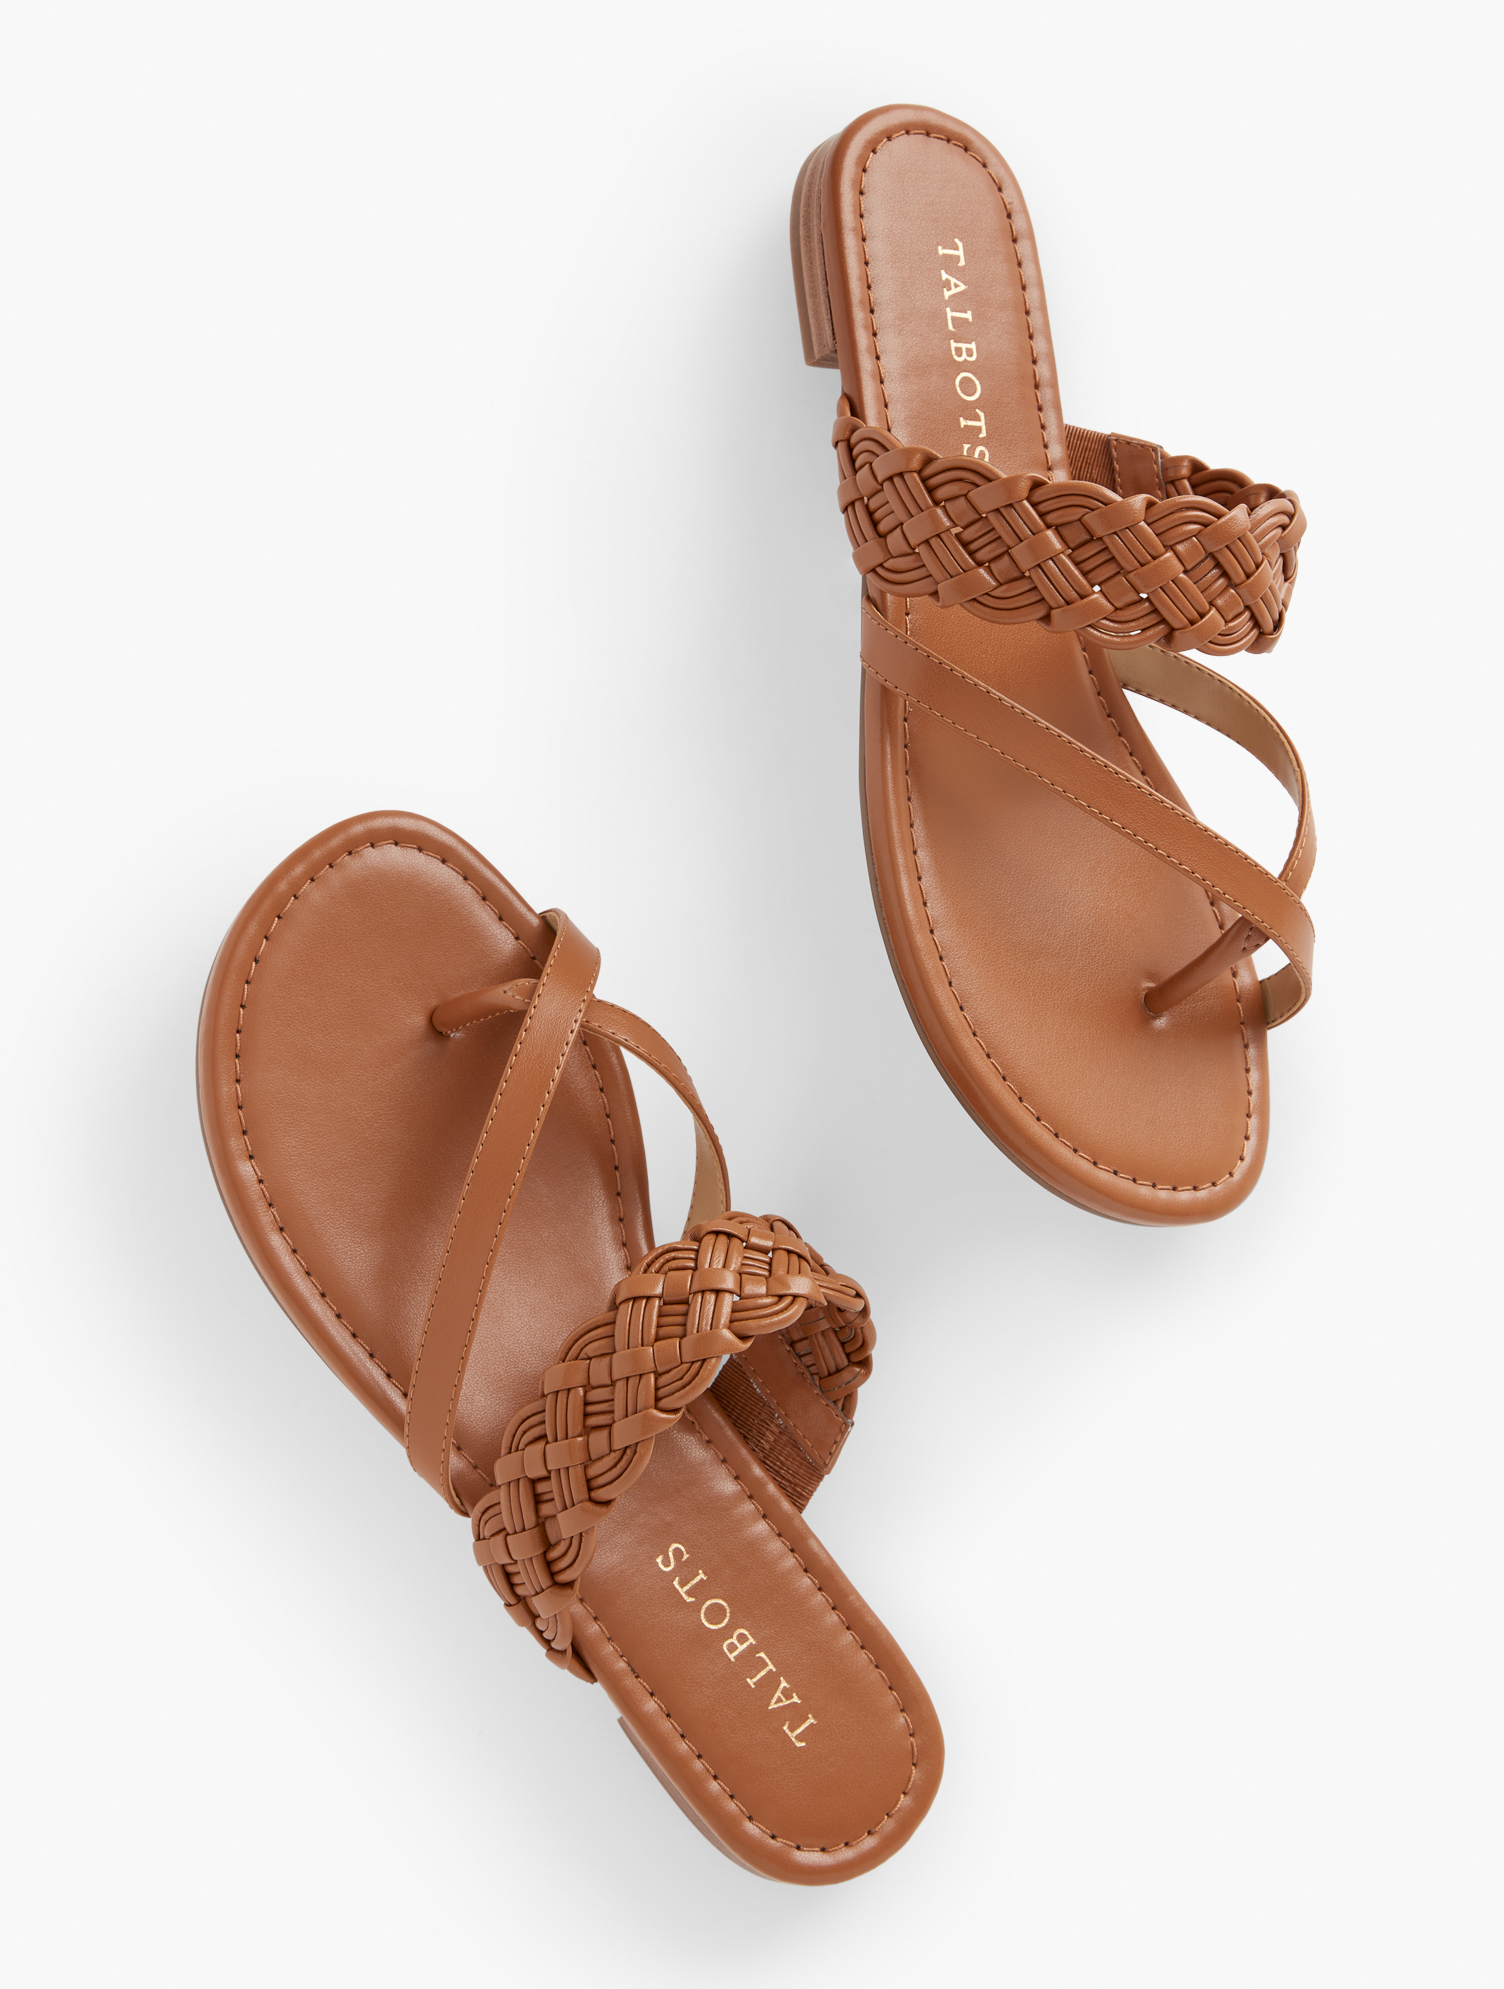 Talbots Gia Braided Sandals - Havana Tan - 5m